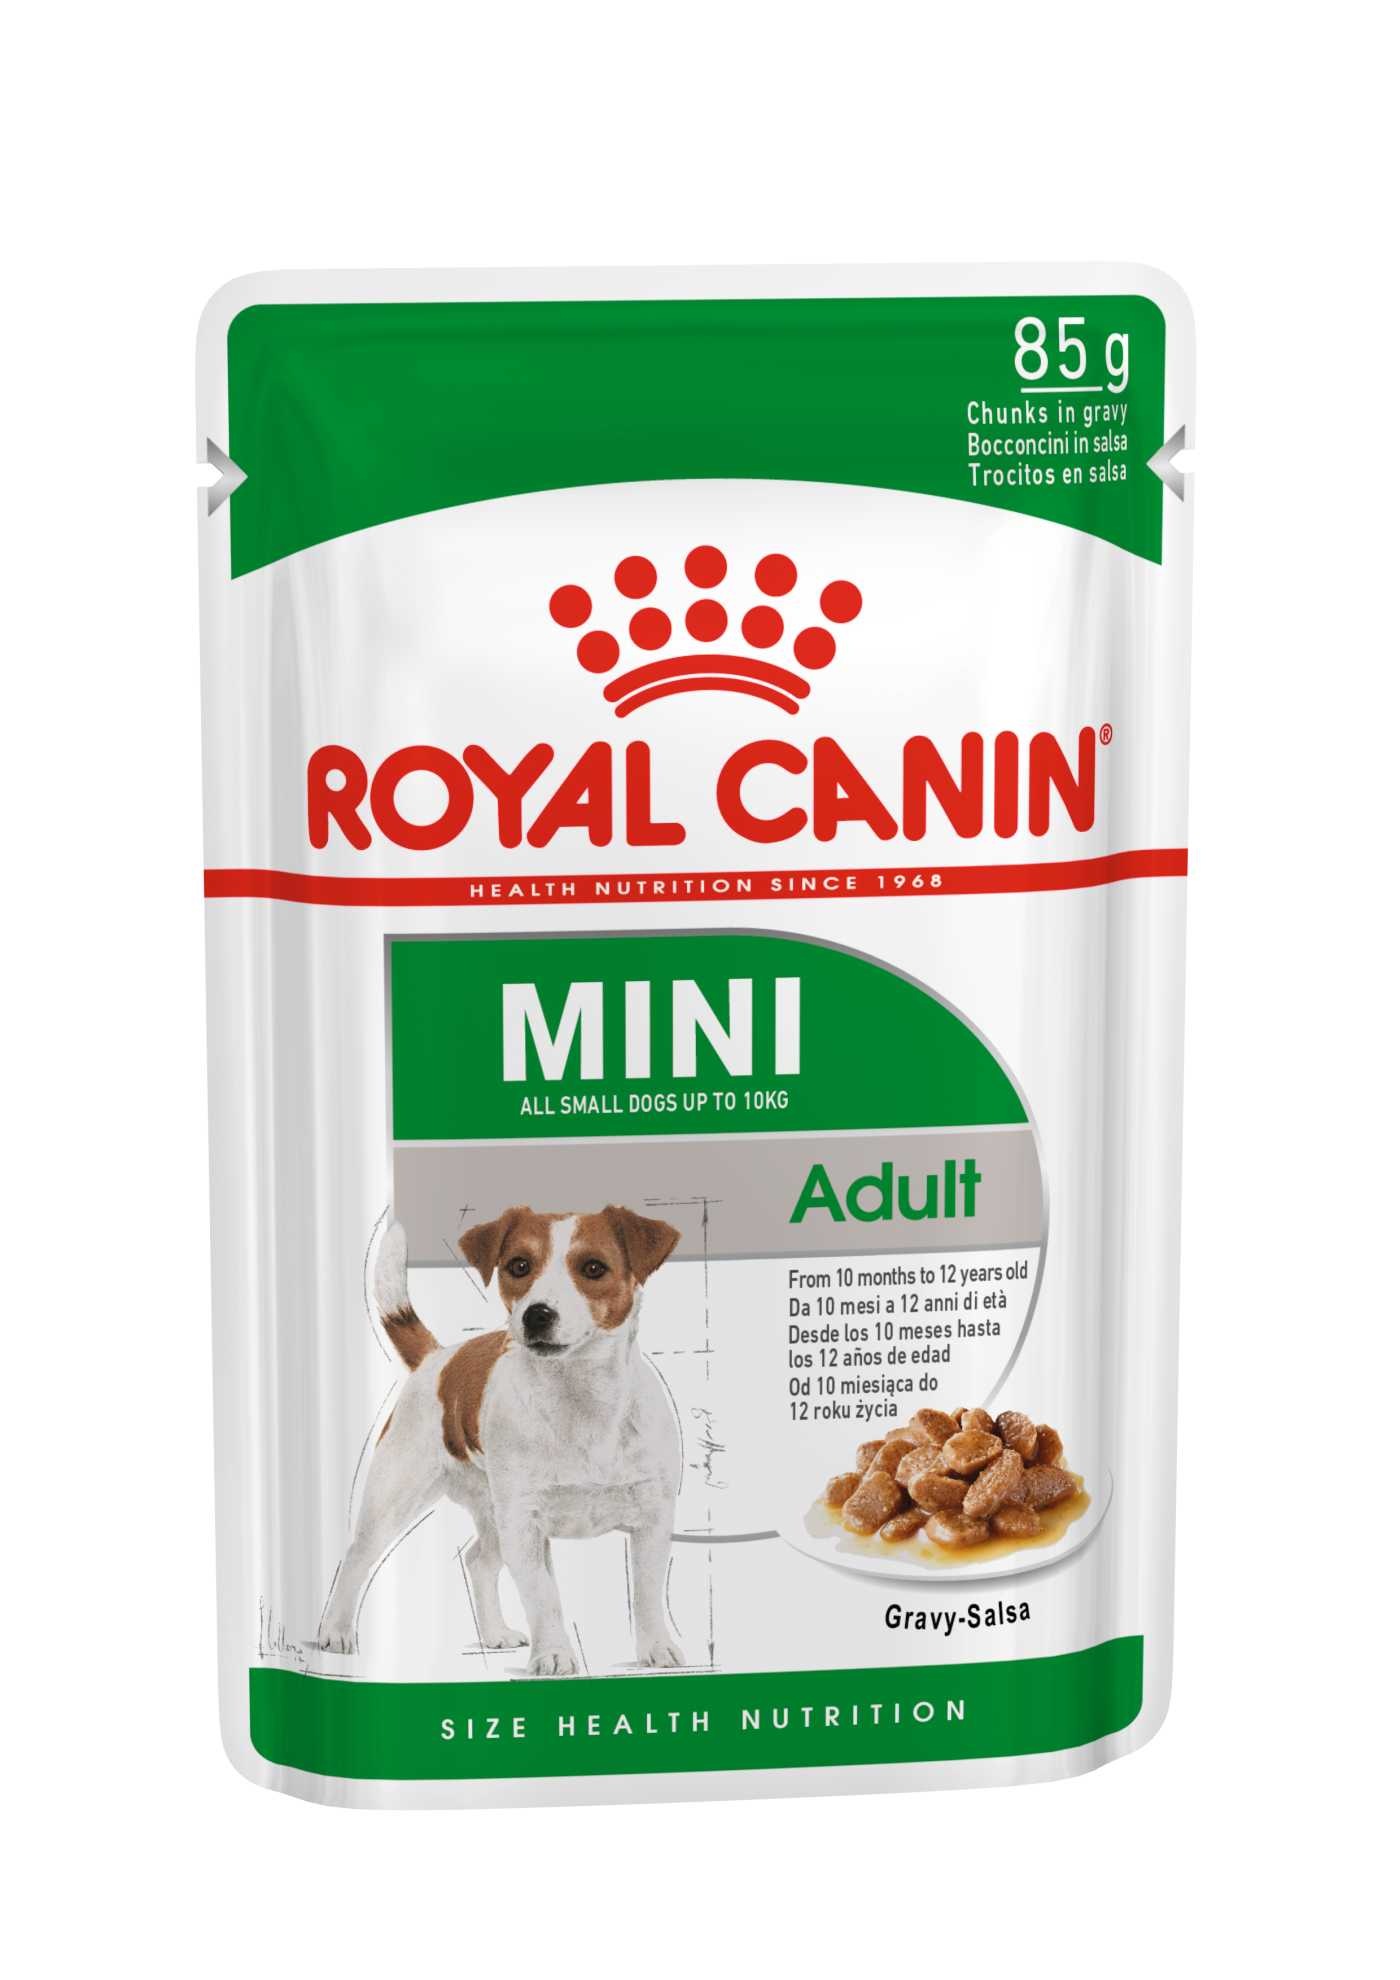 Royal Canin | Marketing Mind